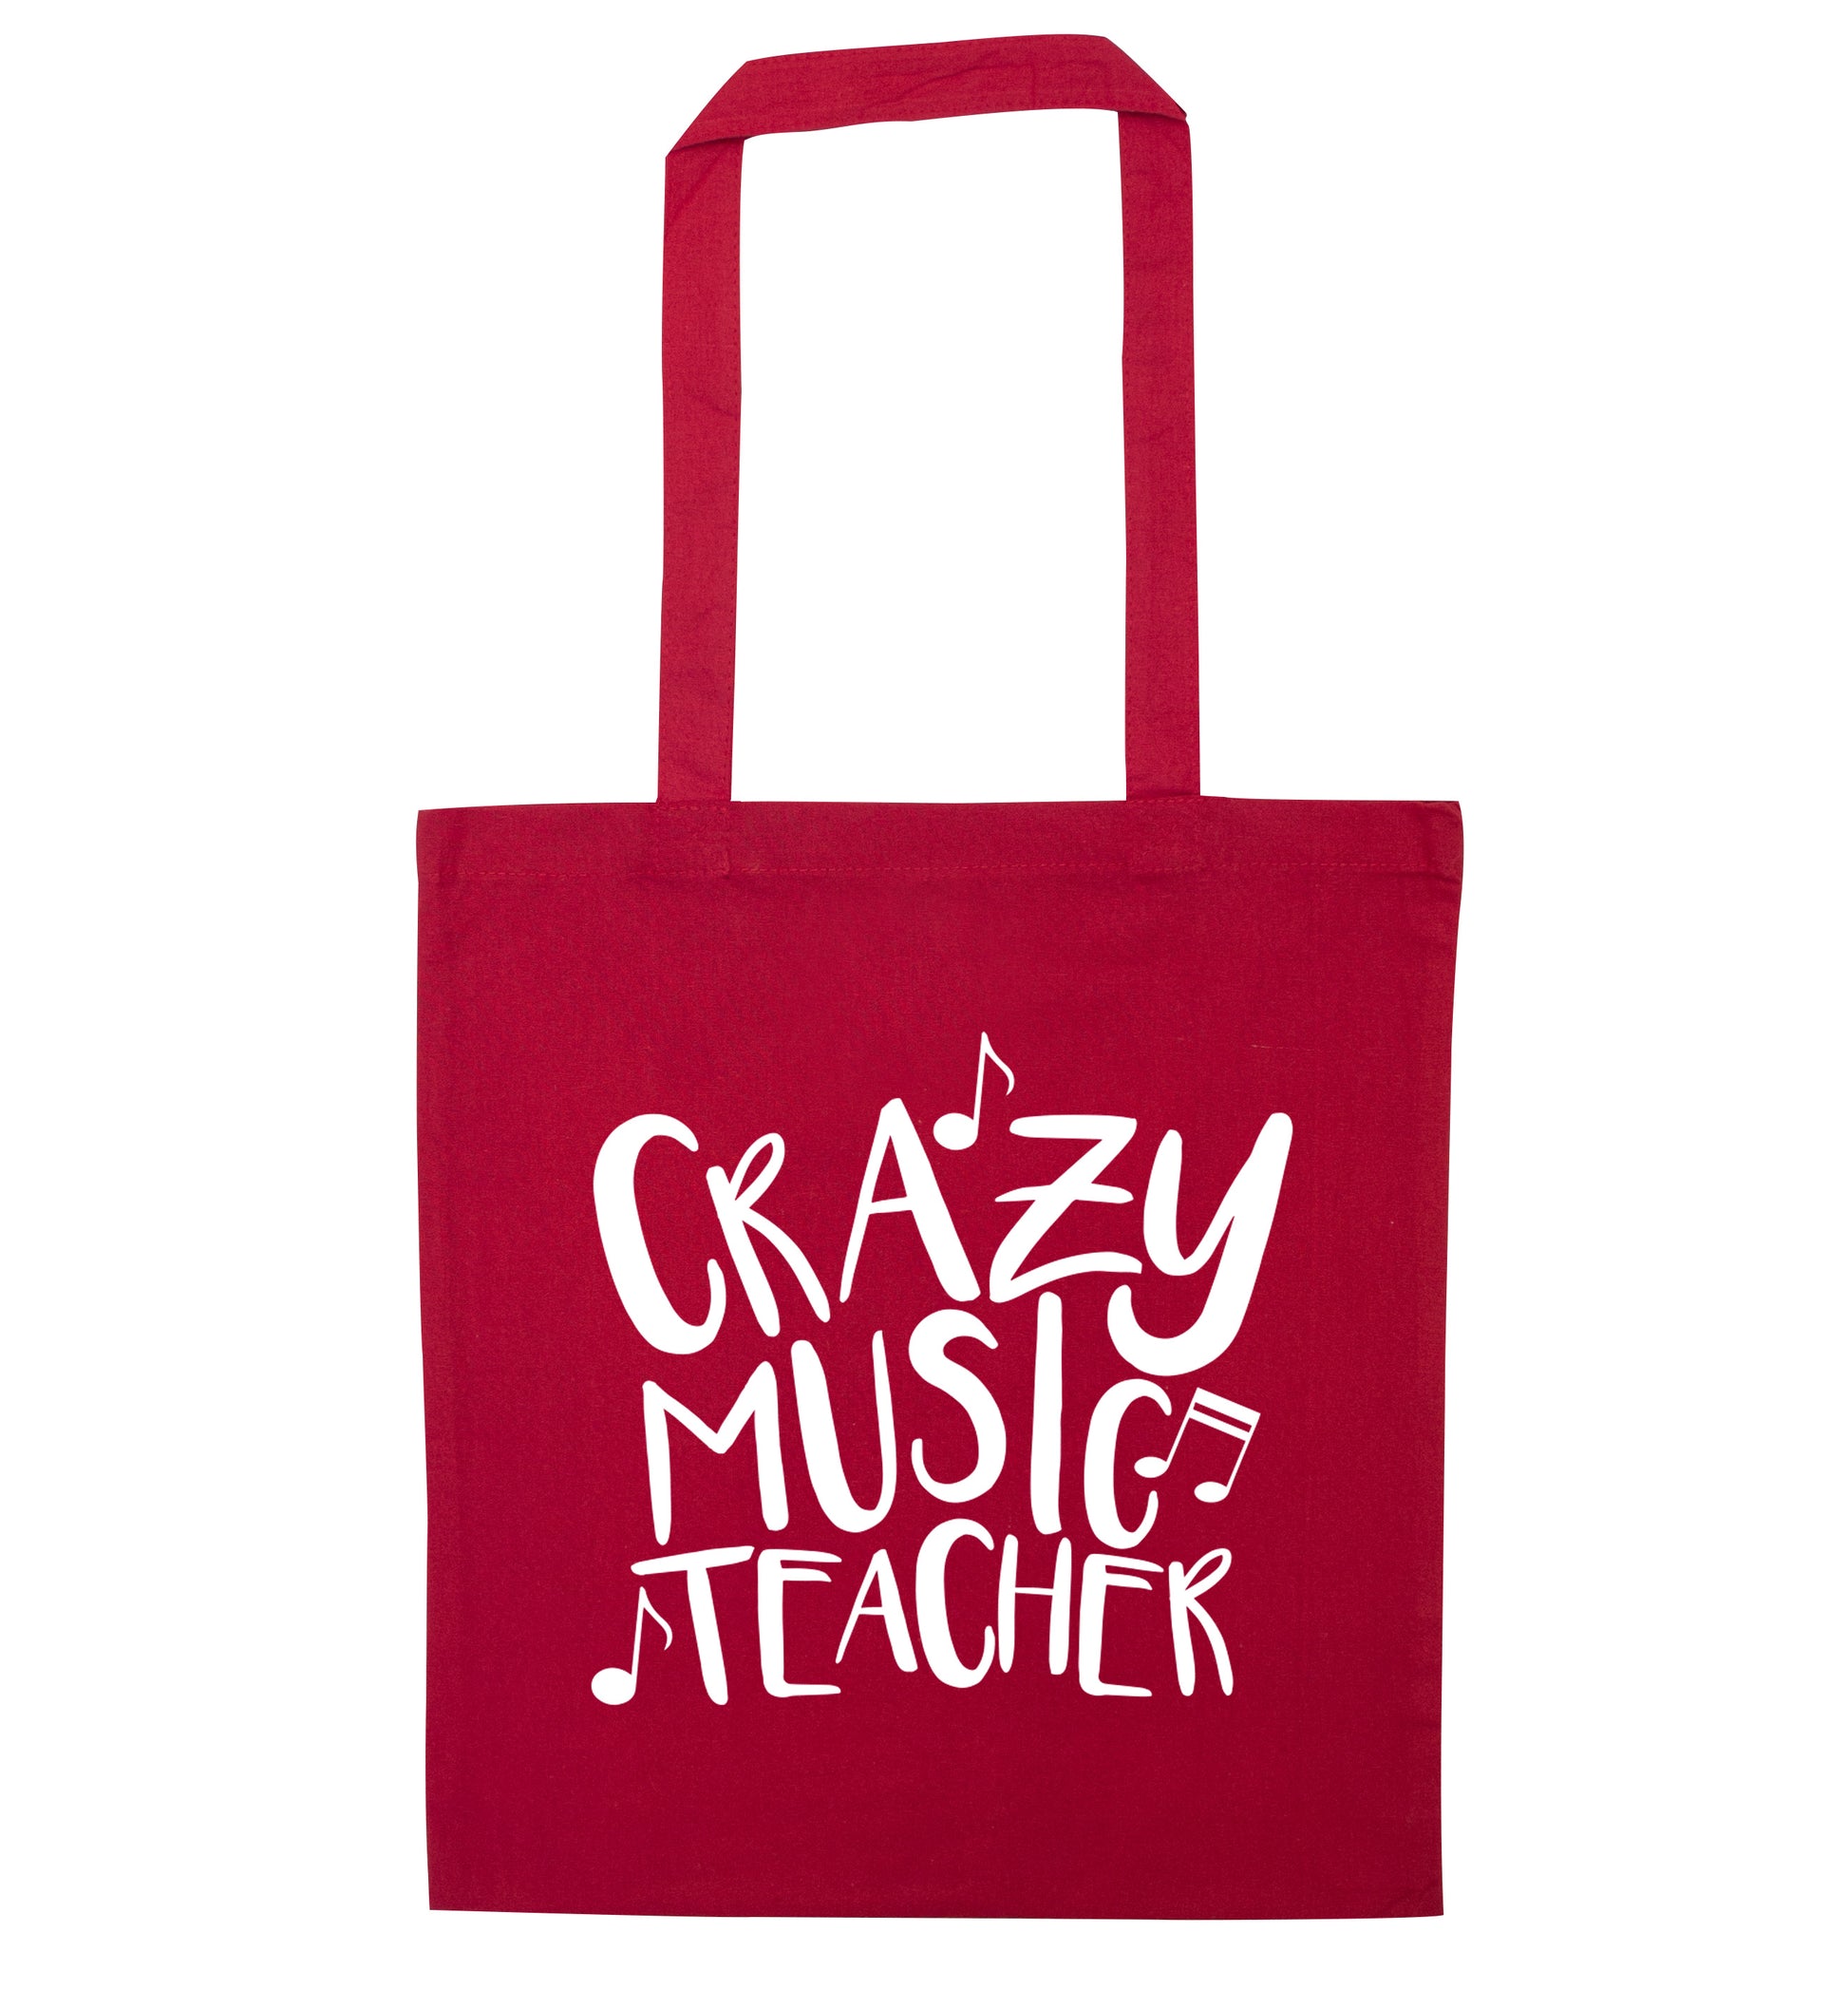 Crazy music teacher red tote bag